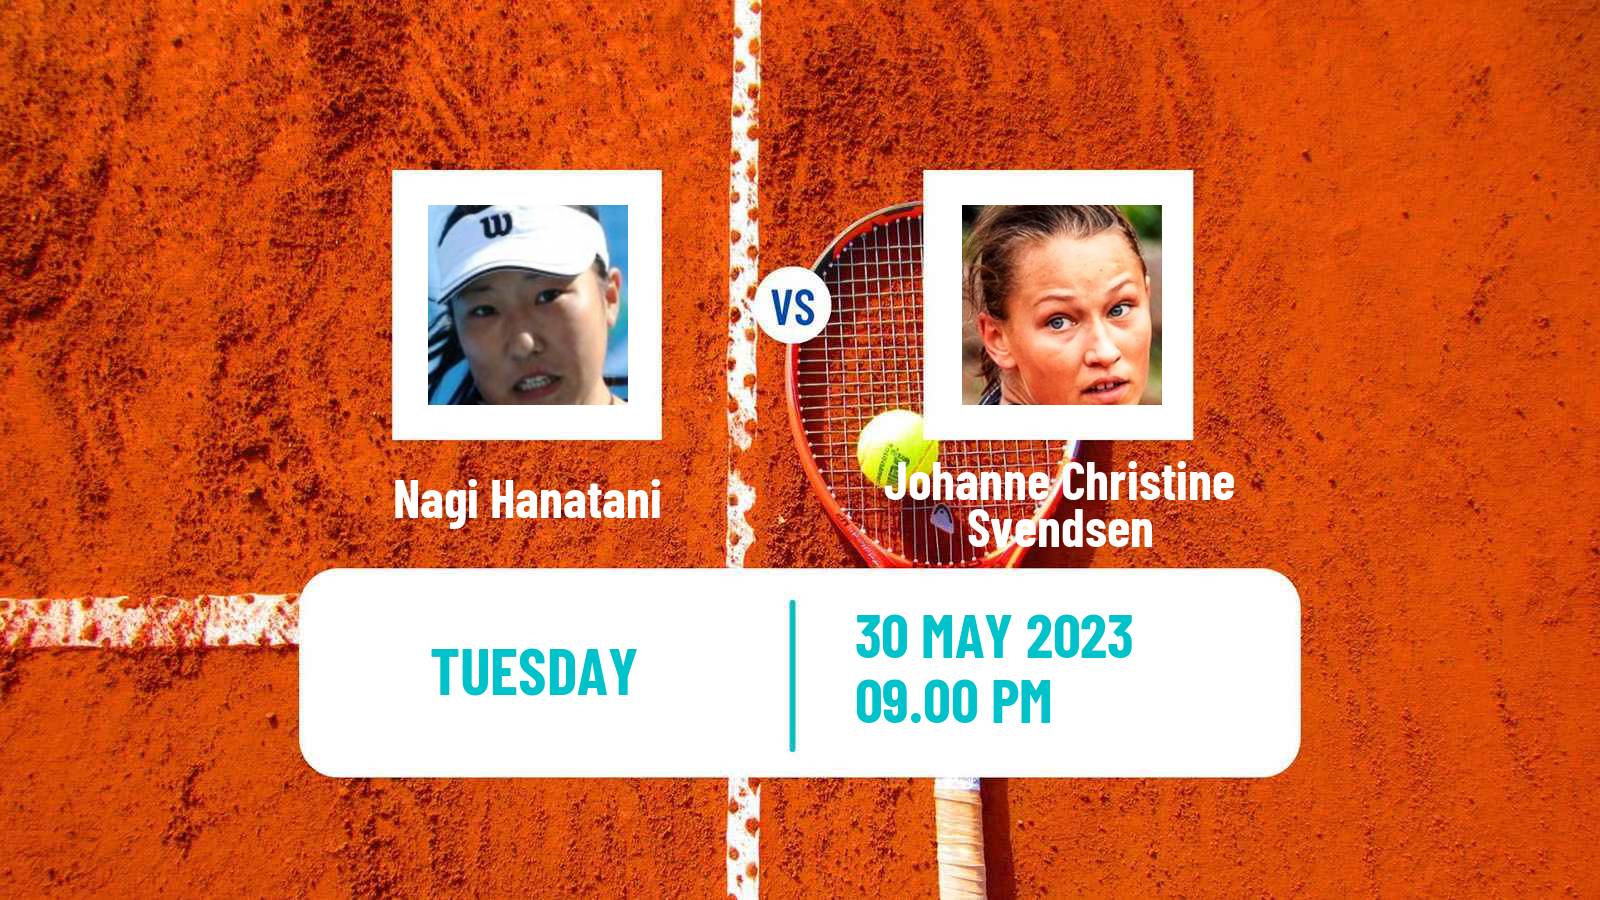 Tennis ITF W25 Tokyo Women Nagi Hanatani - Johanne Christine Svendsen